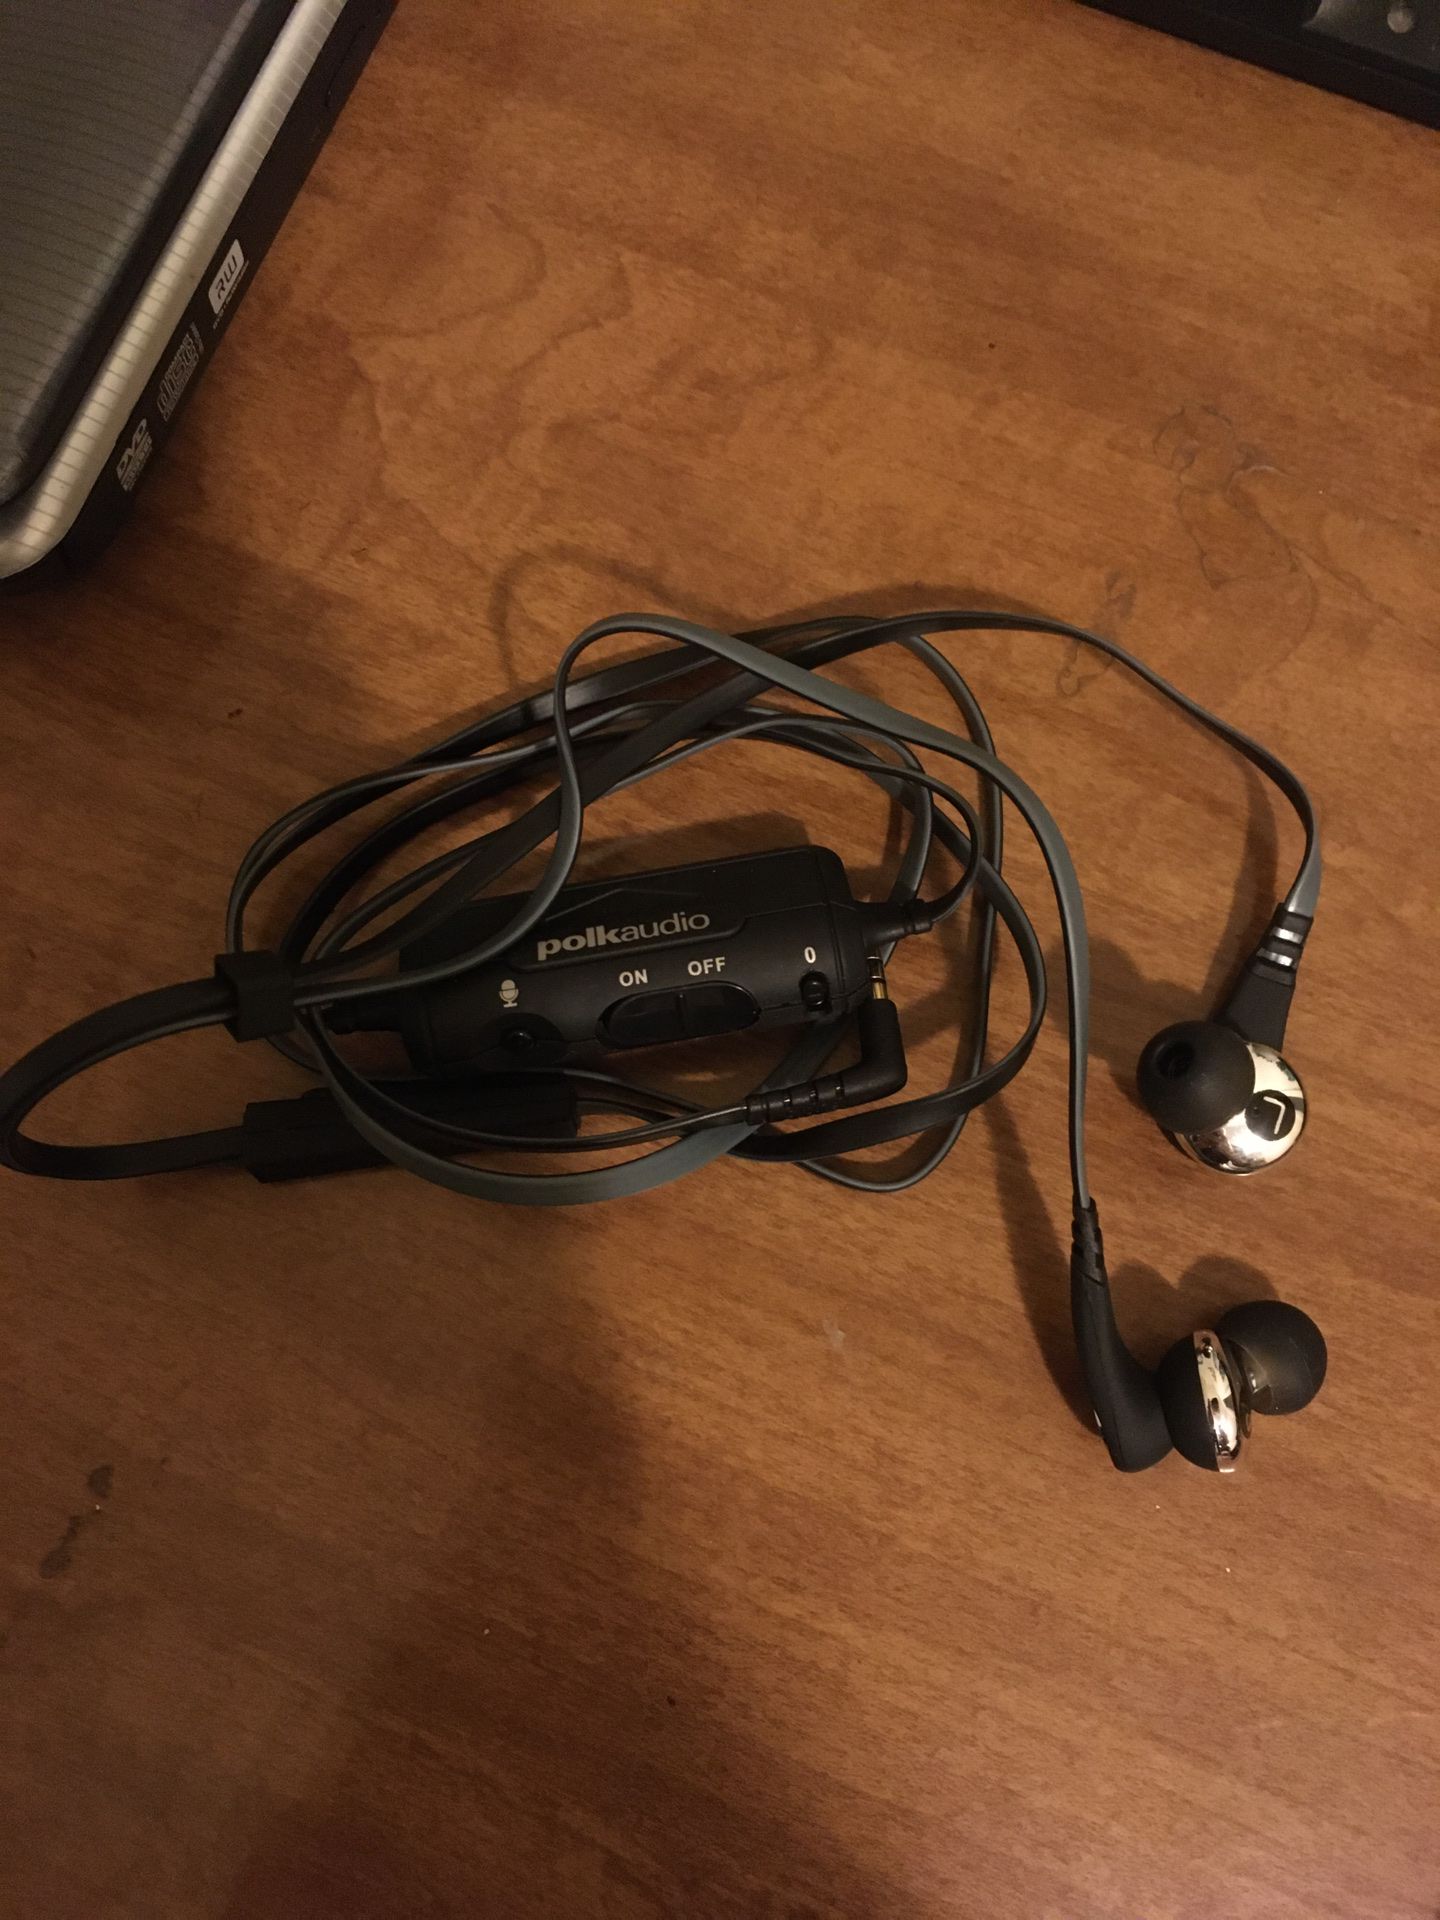 Brand new Polk audio wired ear buds